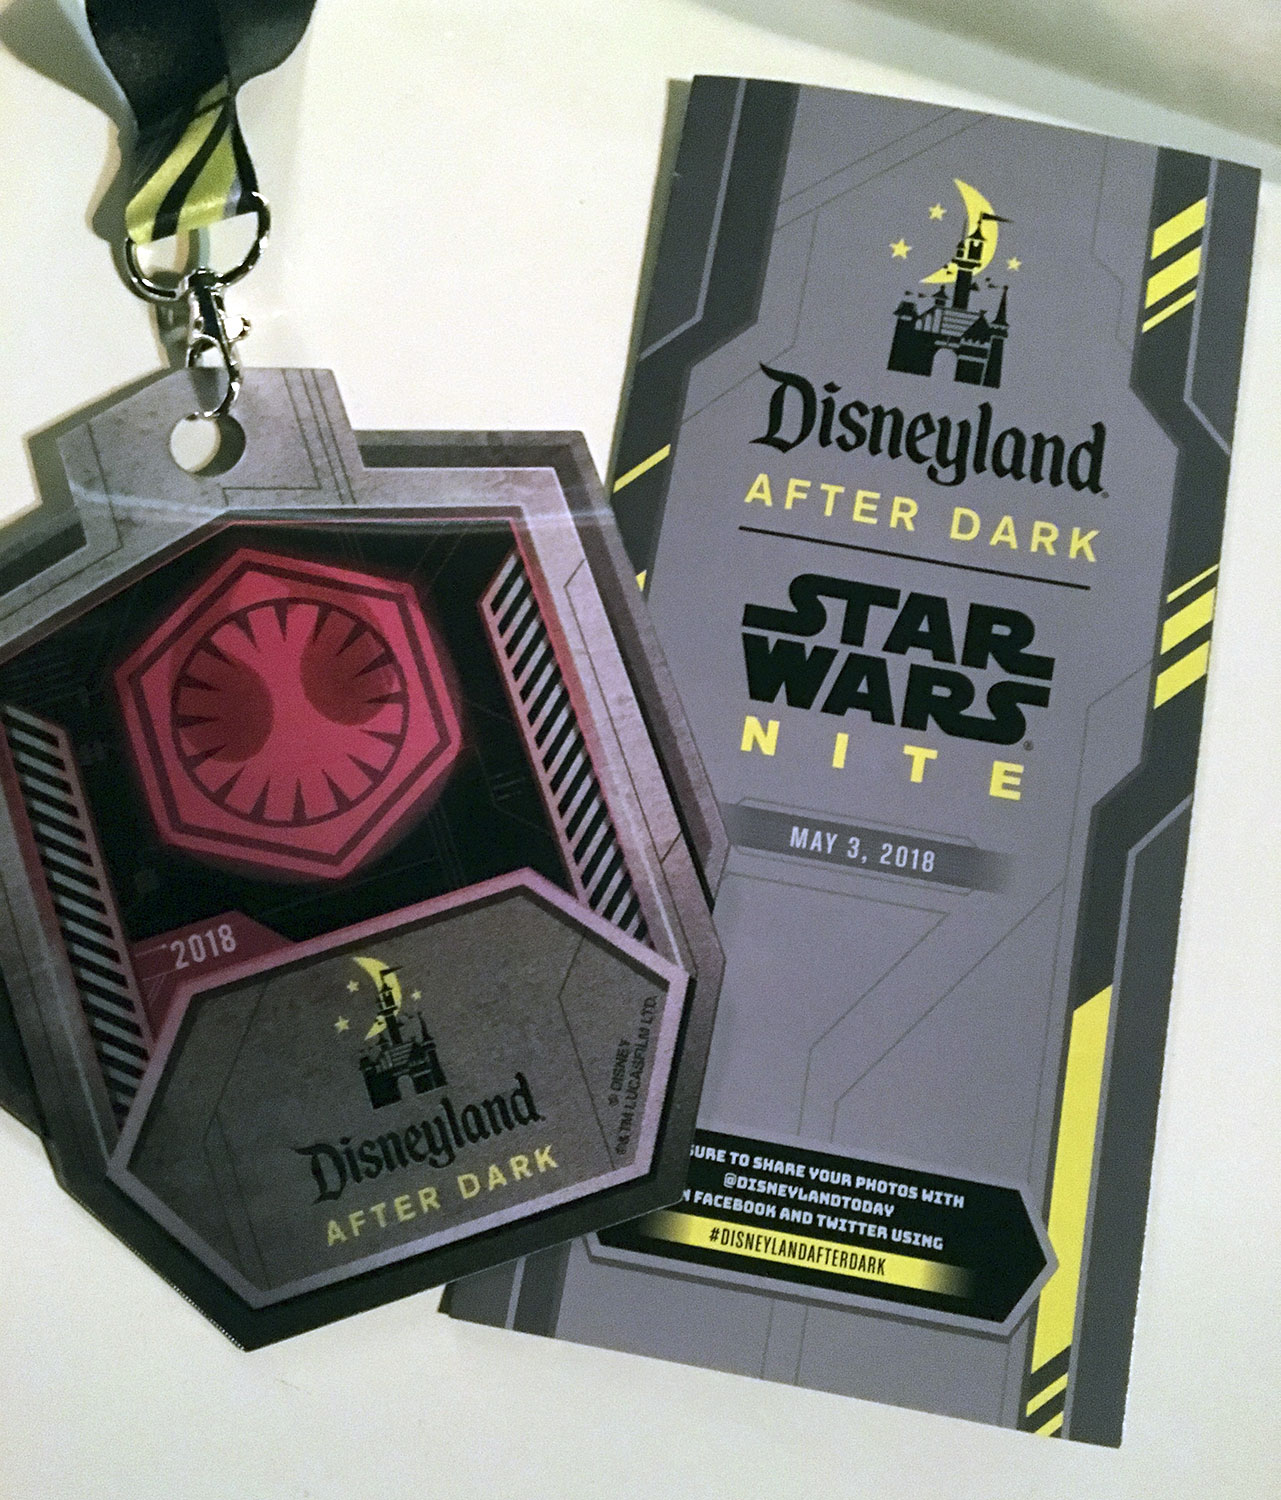 Photo Tour: Disneyland After Dark: Star Wars Nite 1 : EndorExpress